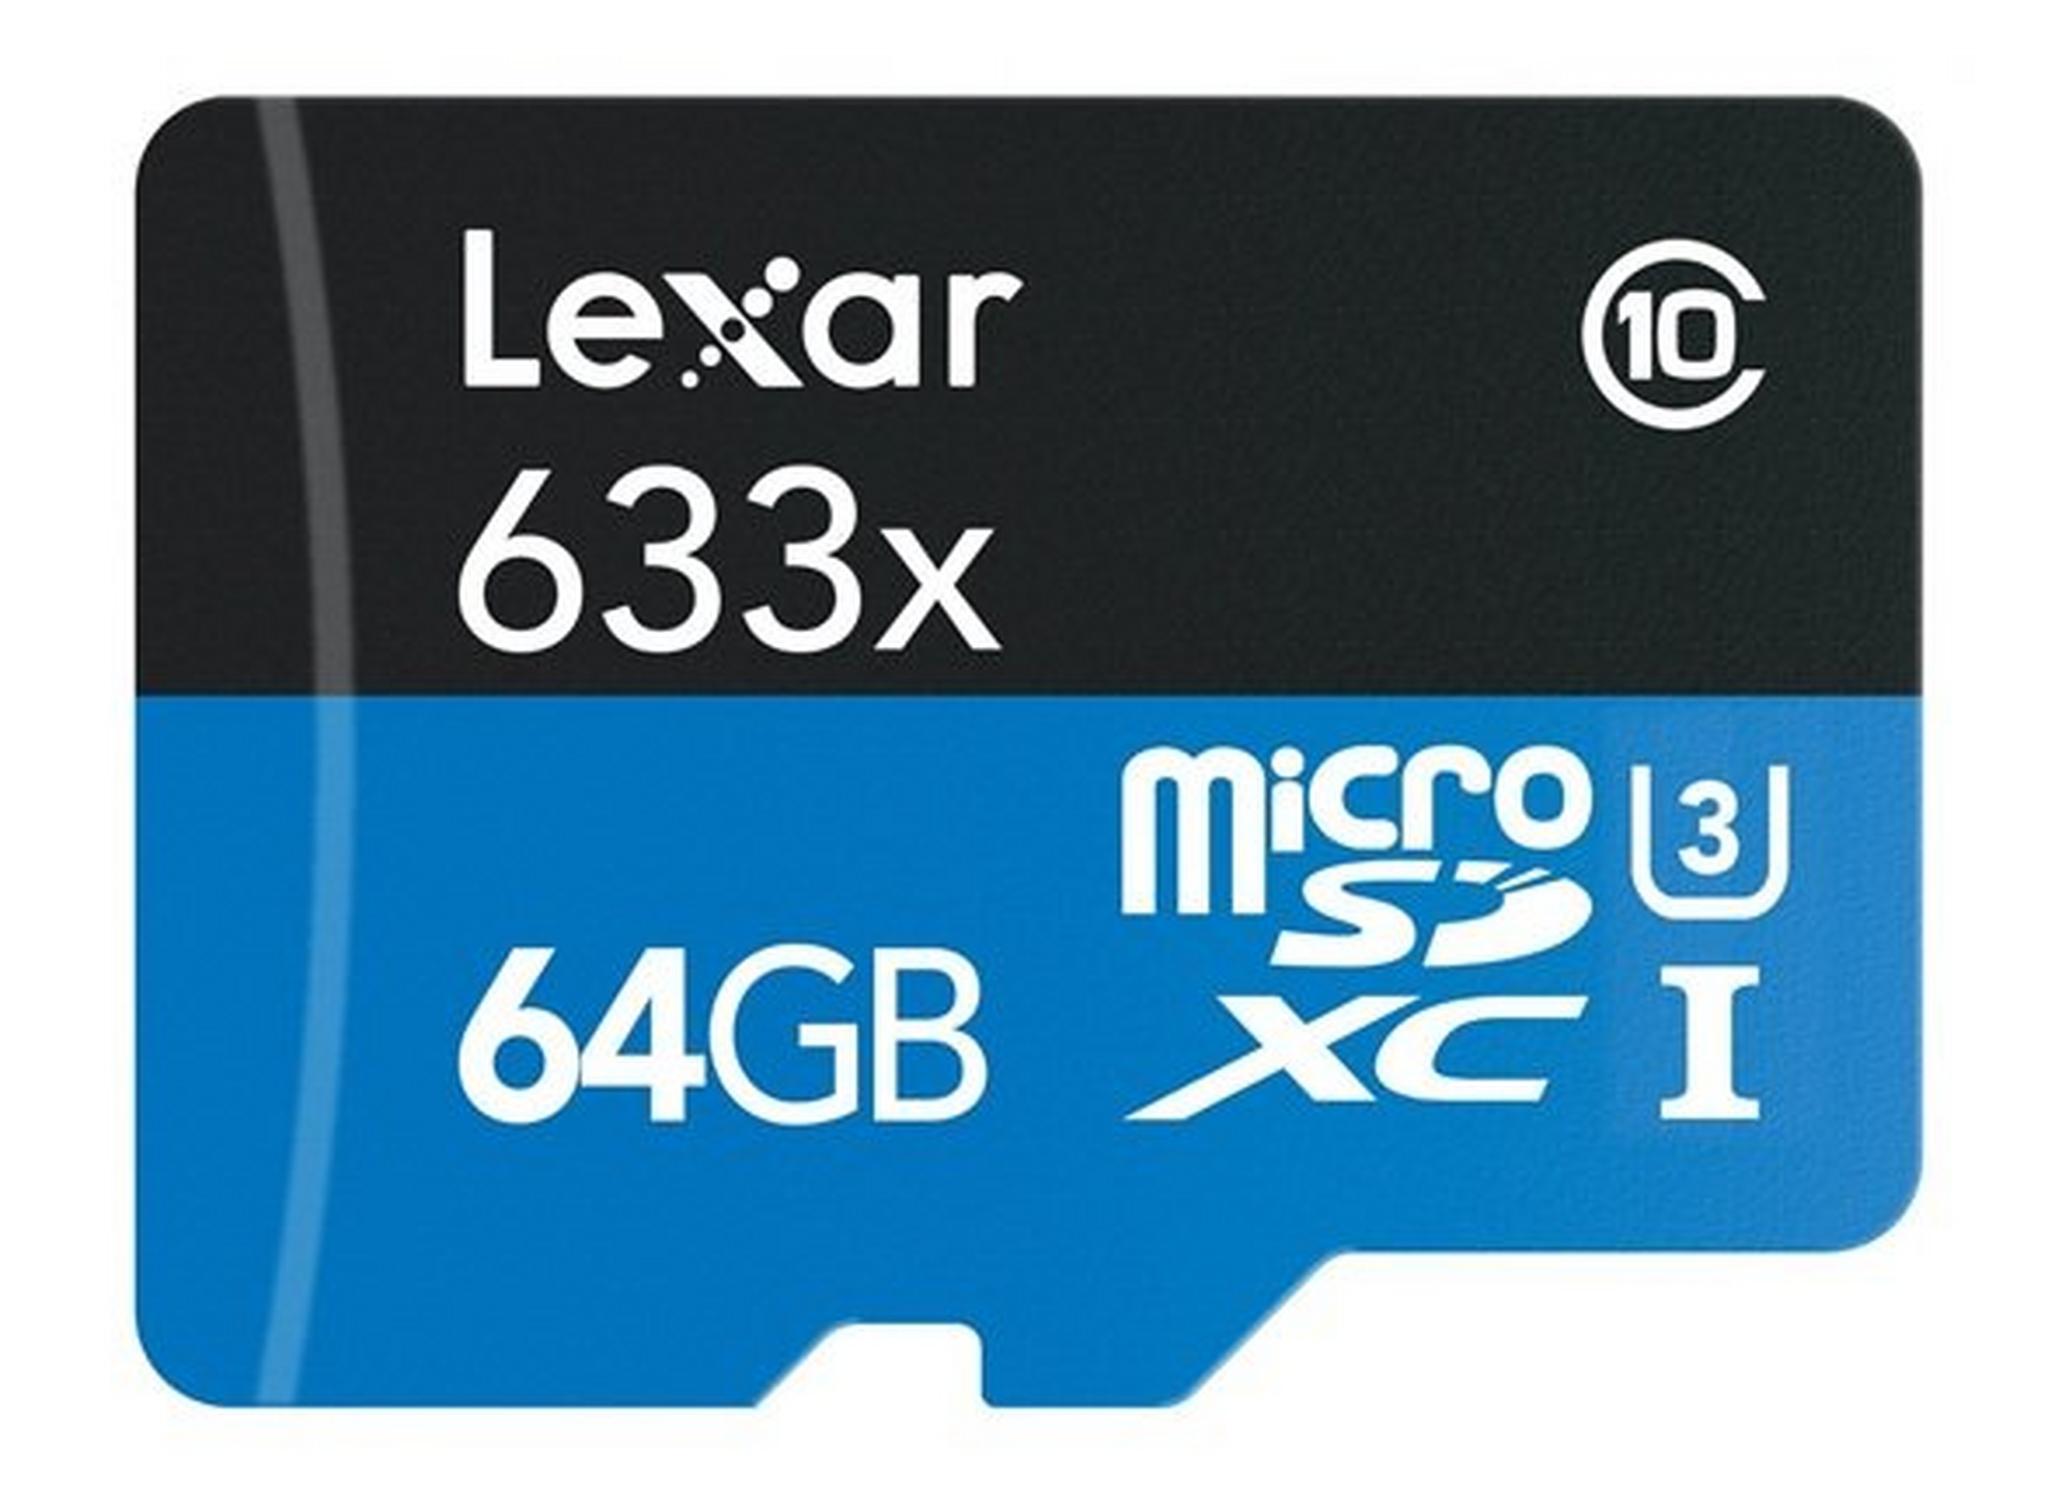 Lexar 64GB MicroSDXC UHS-I Class 10 Memory Card